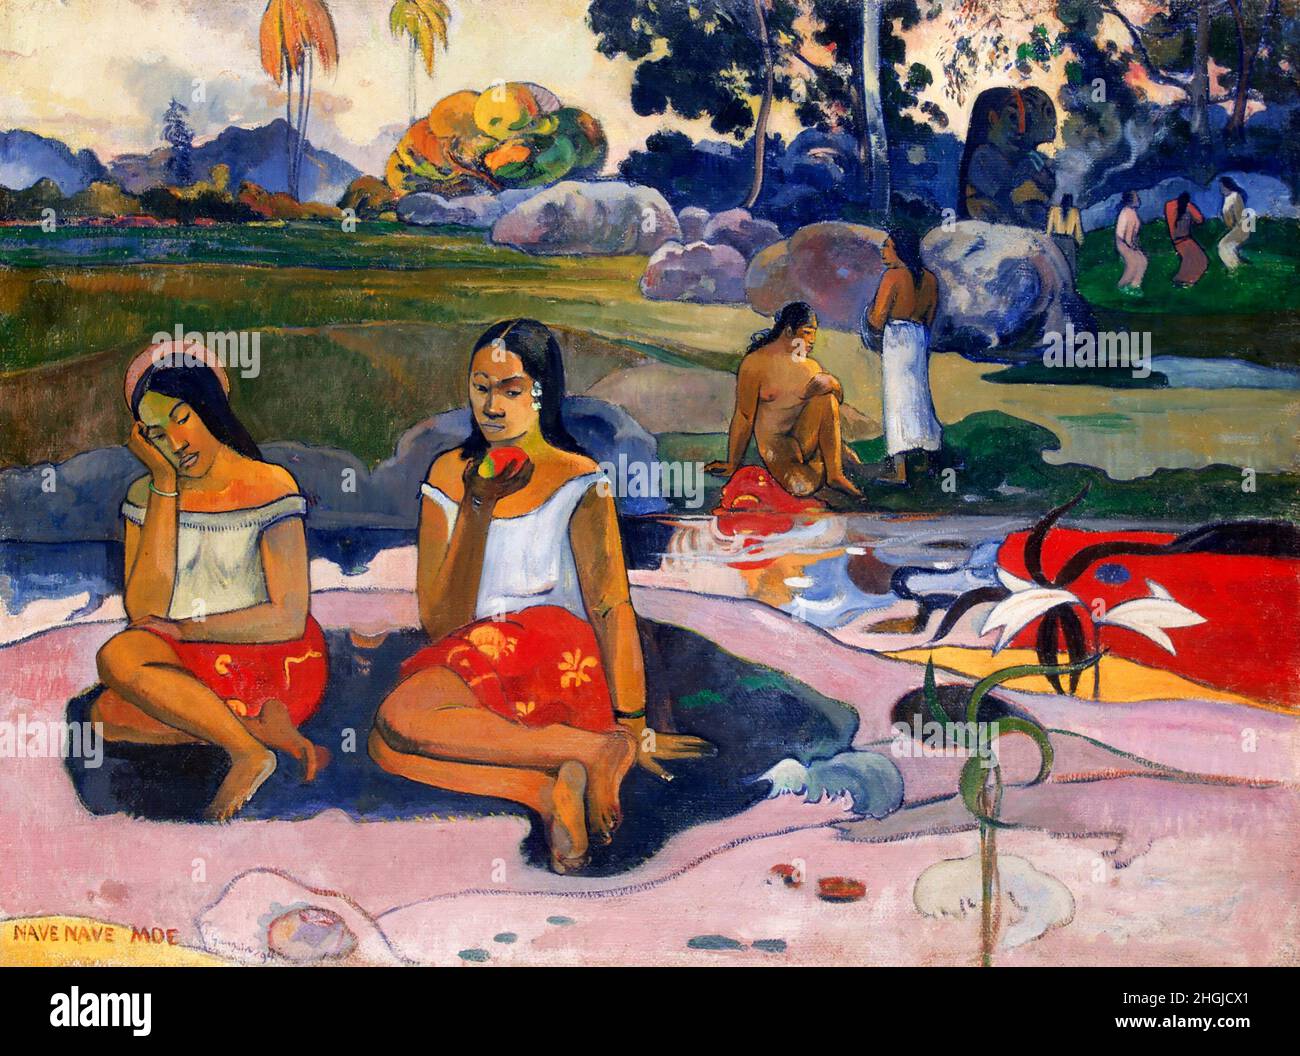 Sakraler Frühling: Süße Träume (Nave Nave moe) von Paul Gauguin (1848-1903), Öl auf Leinwand, 1894 Stockfoto